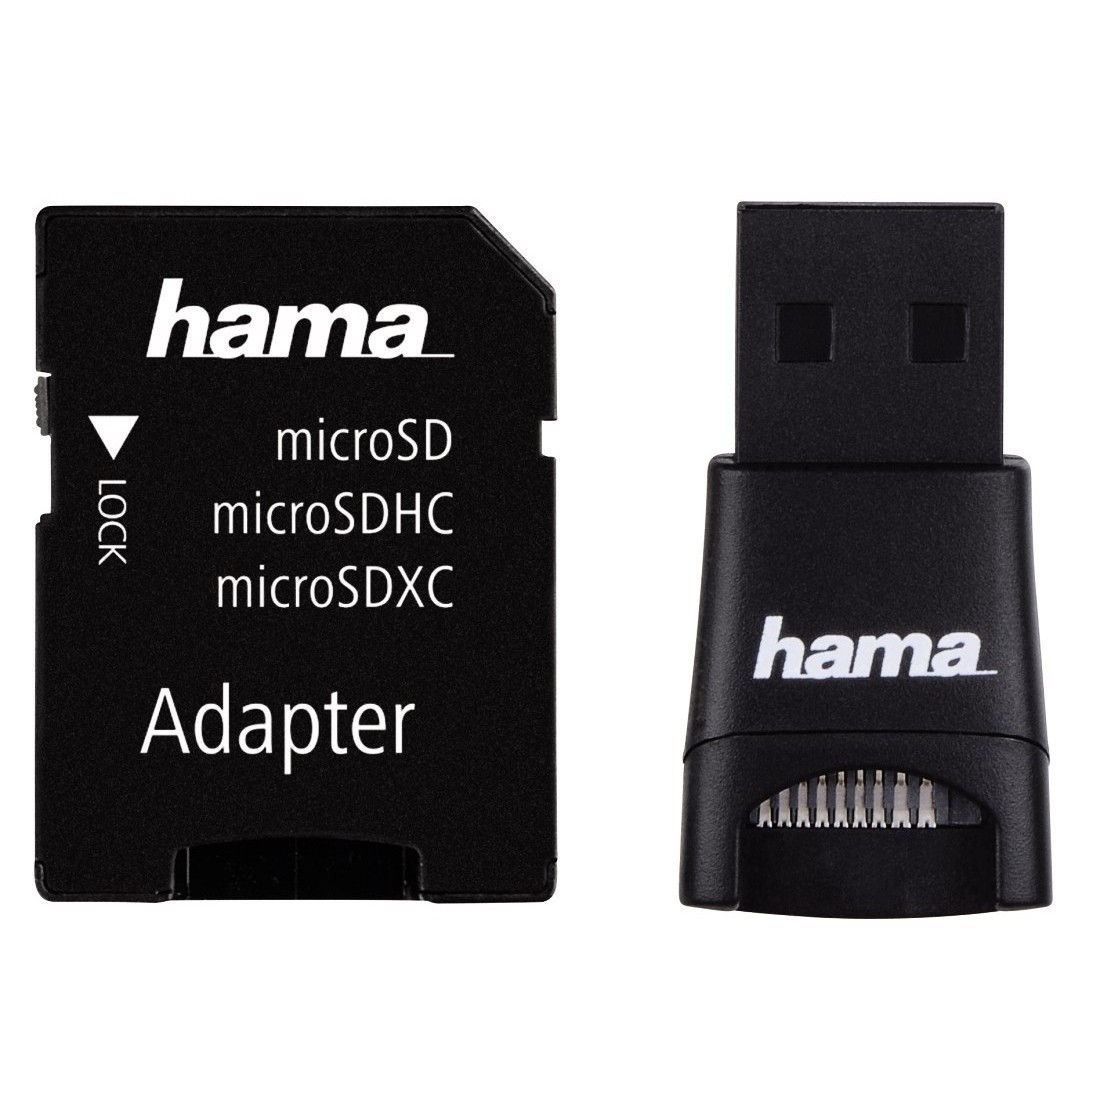 Адаптер microsdhc. MICROSD USB 2.0. SD Card USB адаптер. MICROSD Micro Reader. Картридер USB 2.0/MICROSD черный.